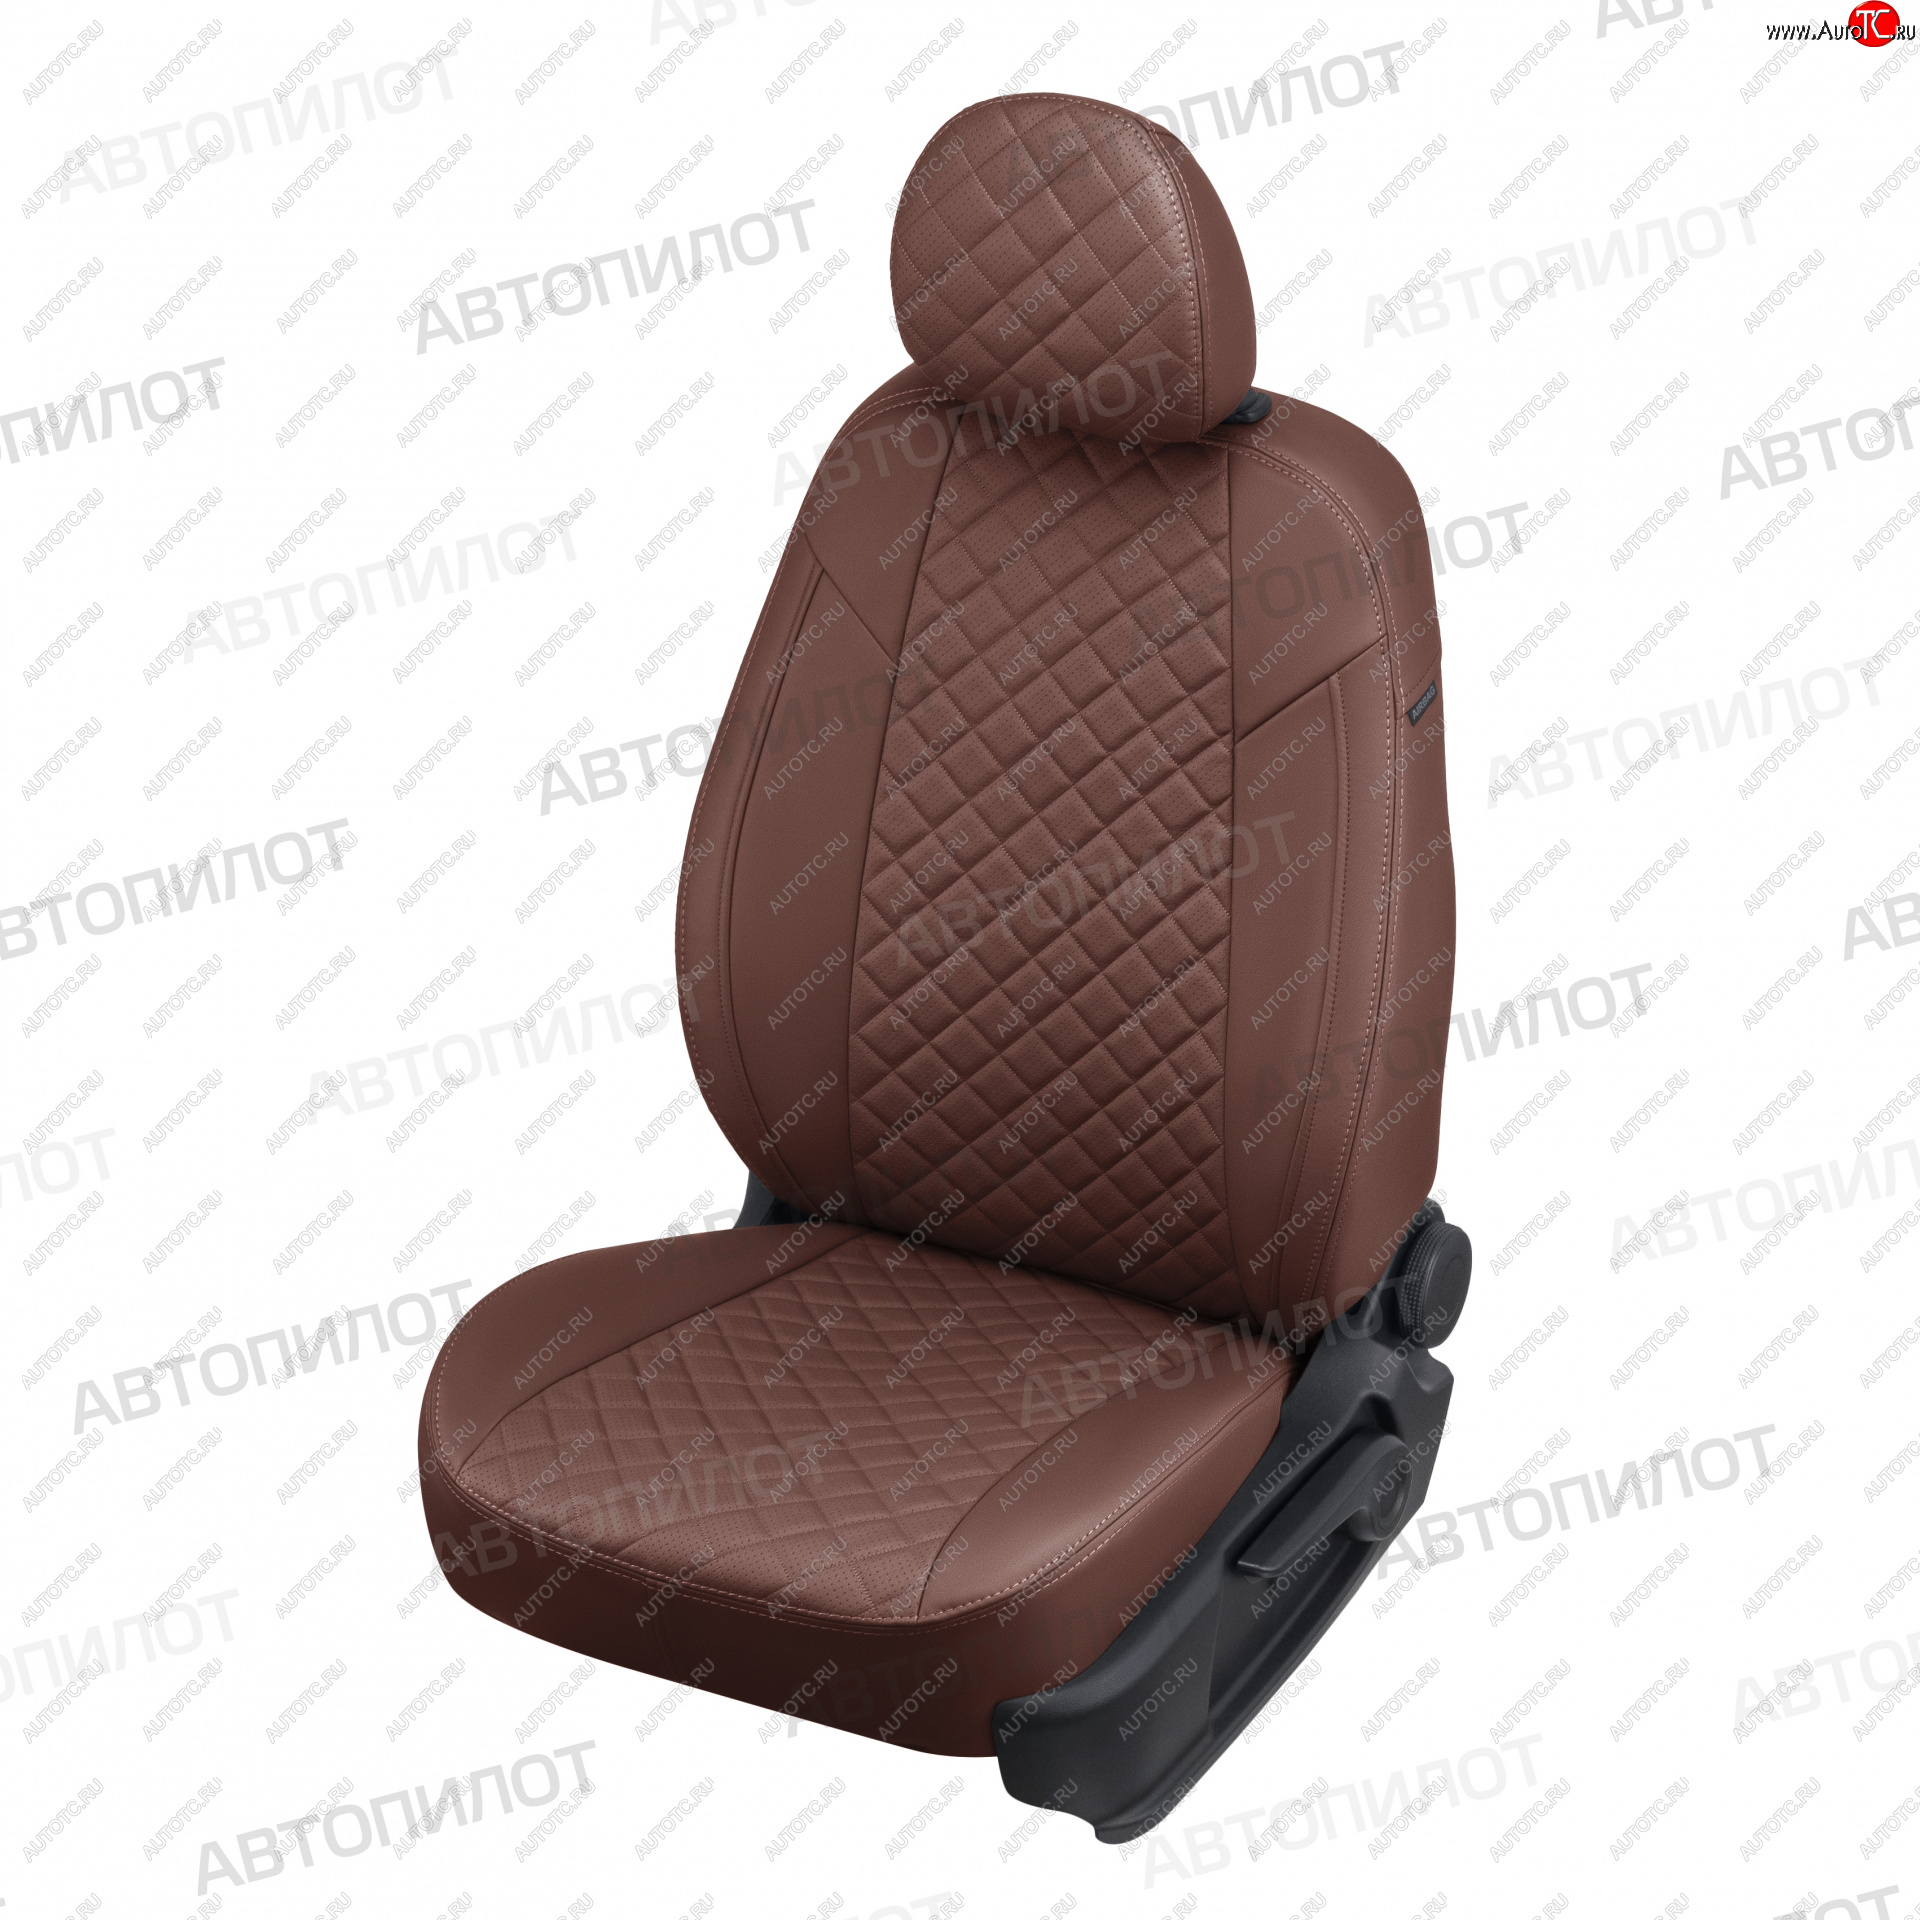 7 799 р. Чехлы сидений (экокожа) Автопилот Ромб  Chevrolet Rezzo (2000-2008) (темно-коричневый)